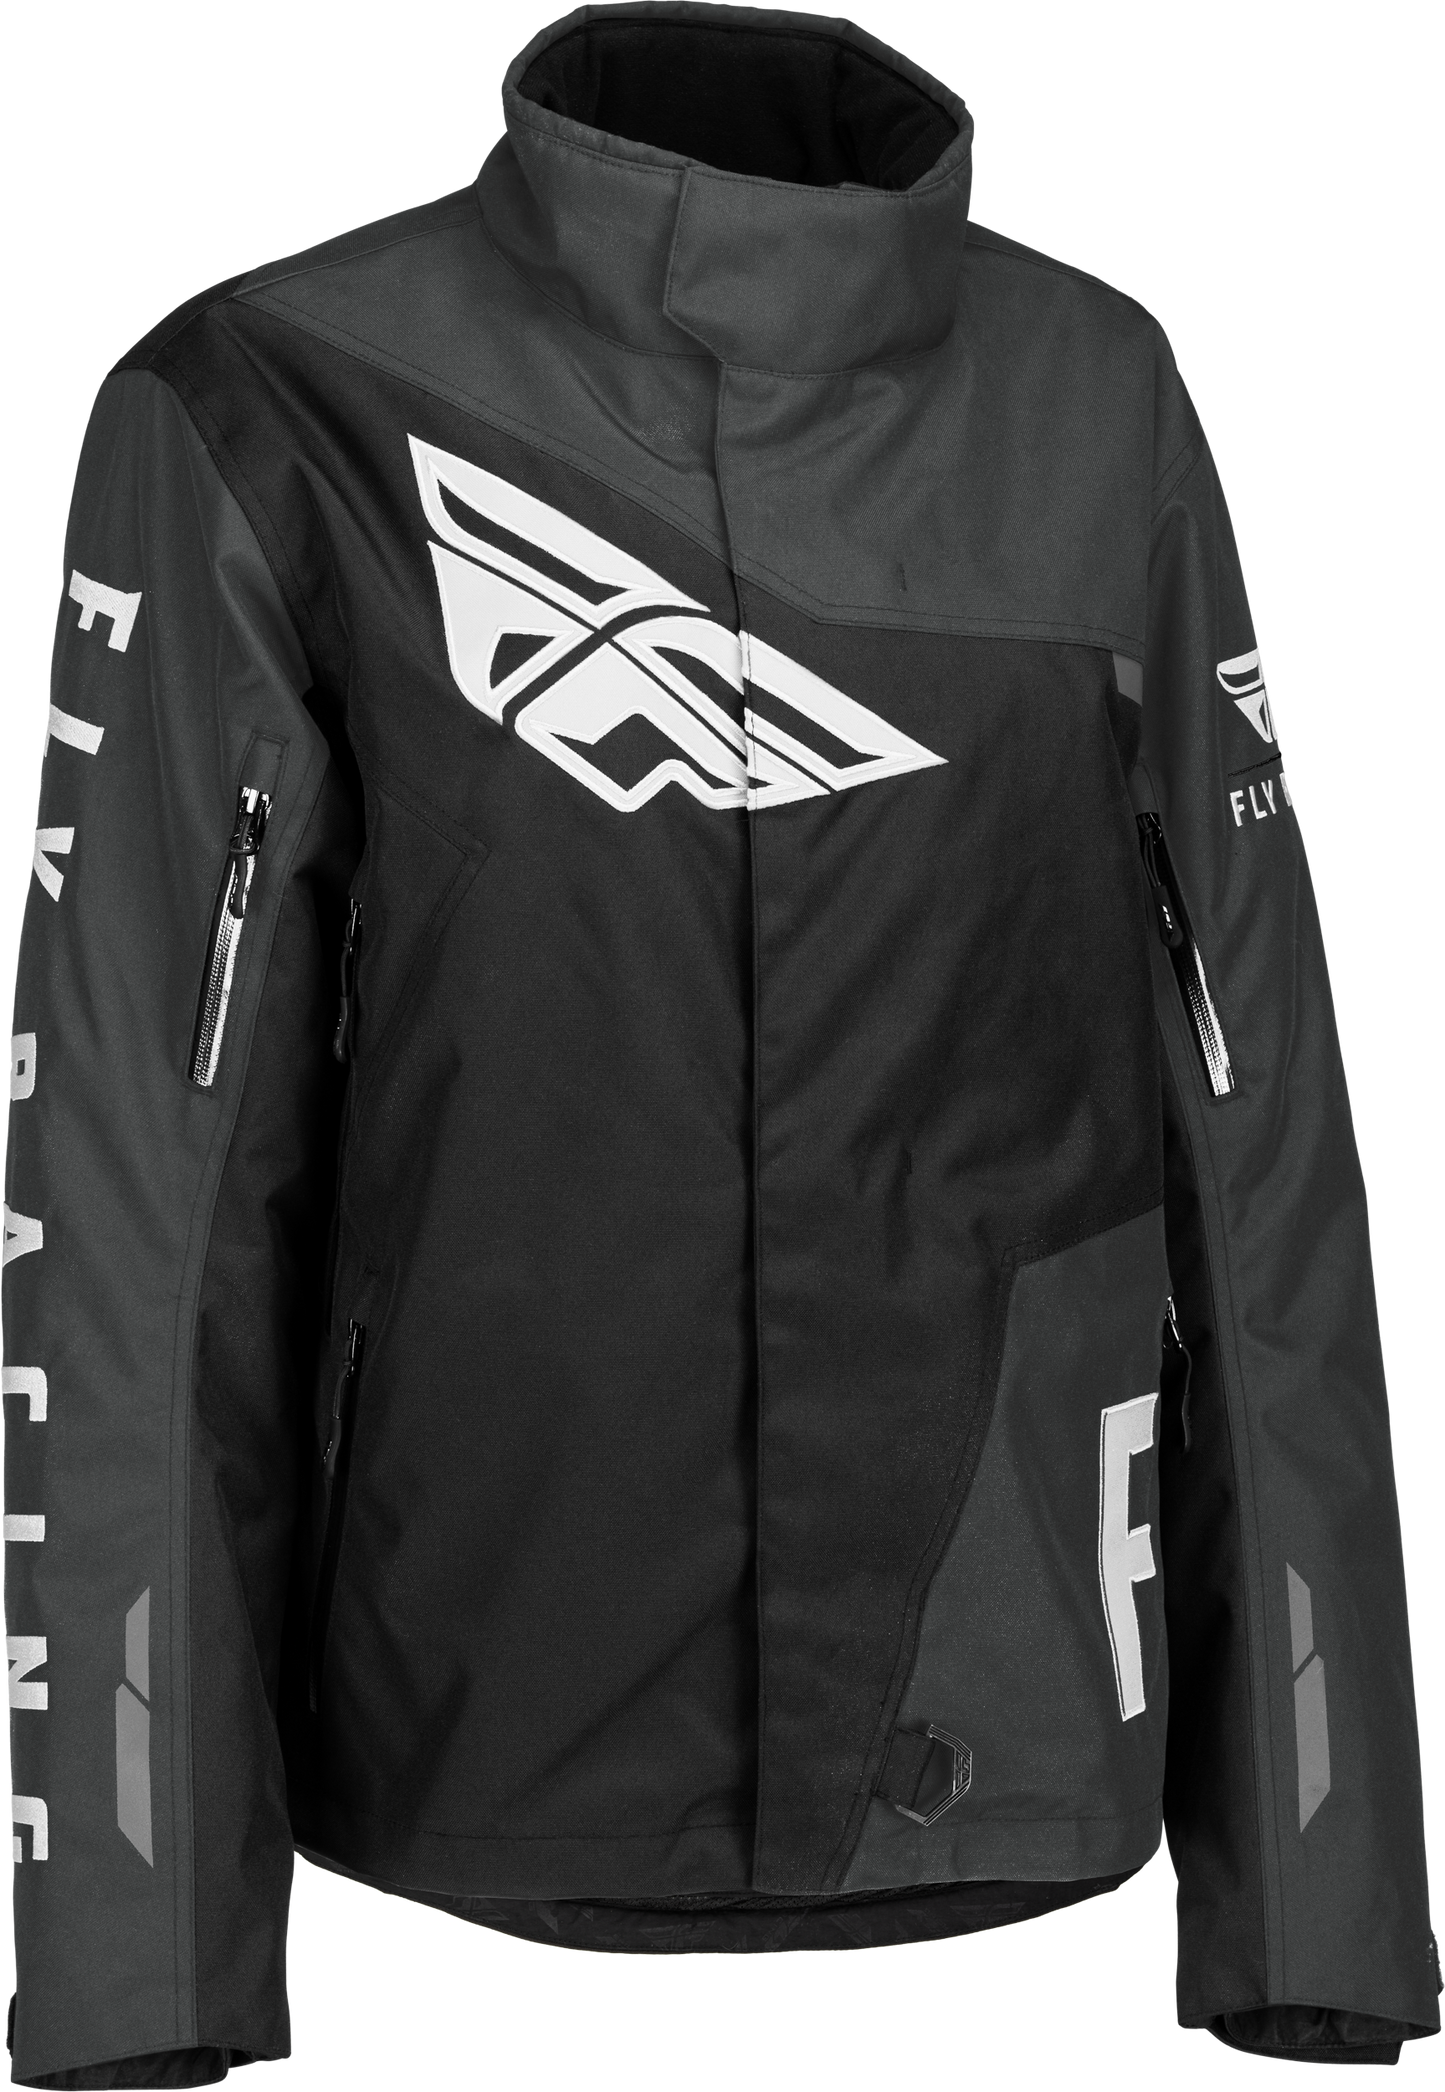 FLY RACING Women's Snx Pro Jacket Black/Grey Md 470-4511M